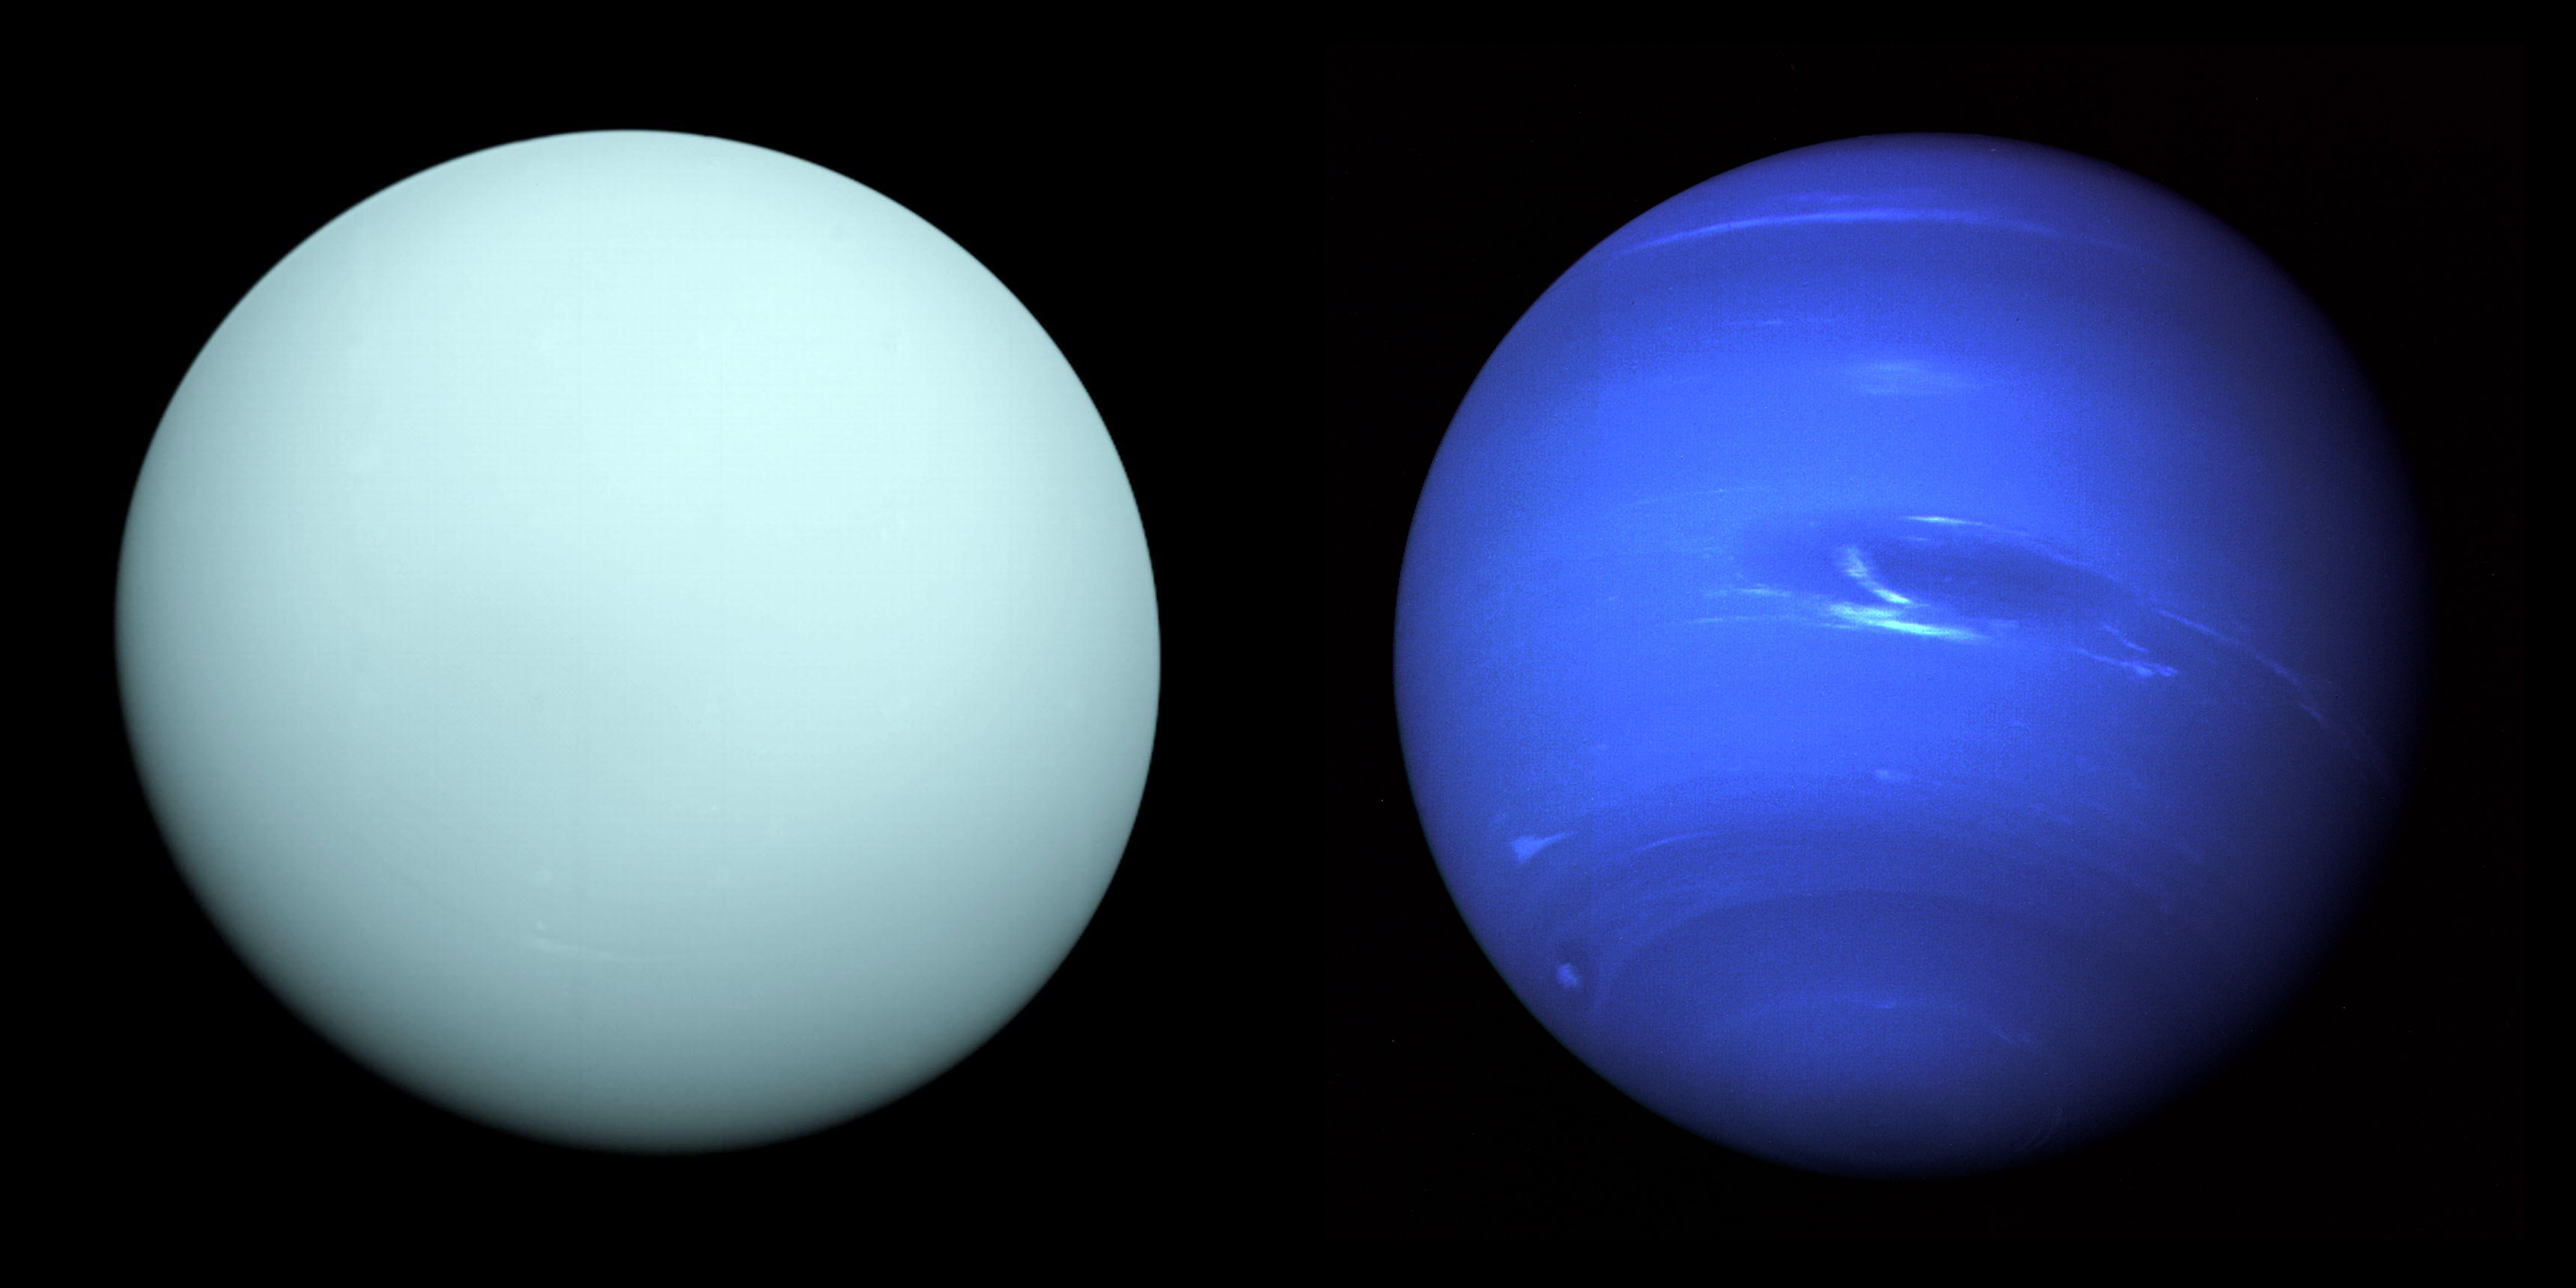 La NASA ha bisogno che tu osservi Urano e Nettuno questa settimana